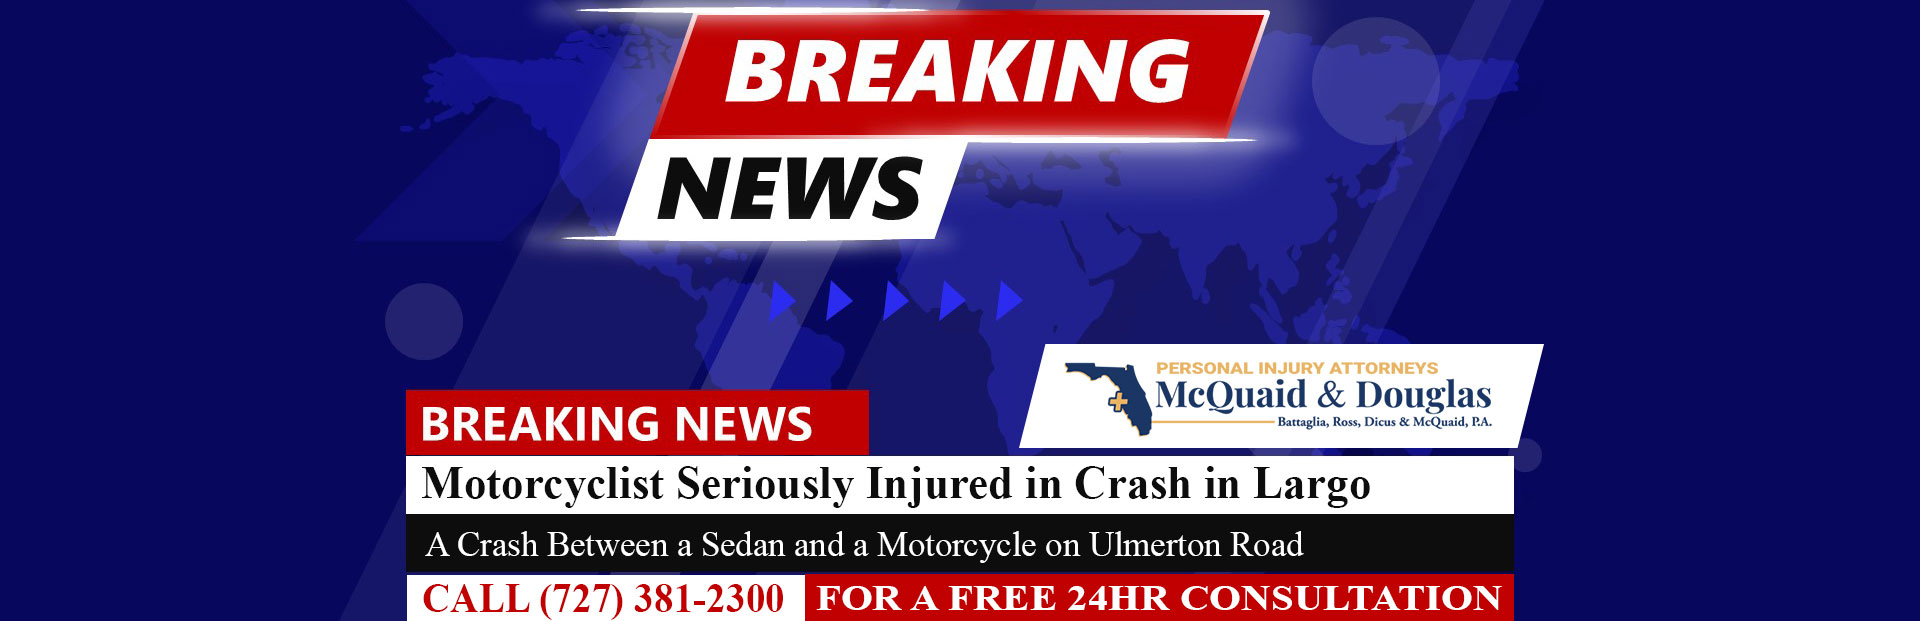 [01-30-23] Motorcyclist Seriously Injured in Crash on Ulmerton Road in Largo